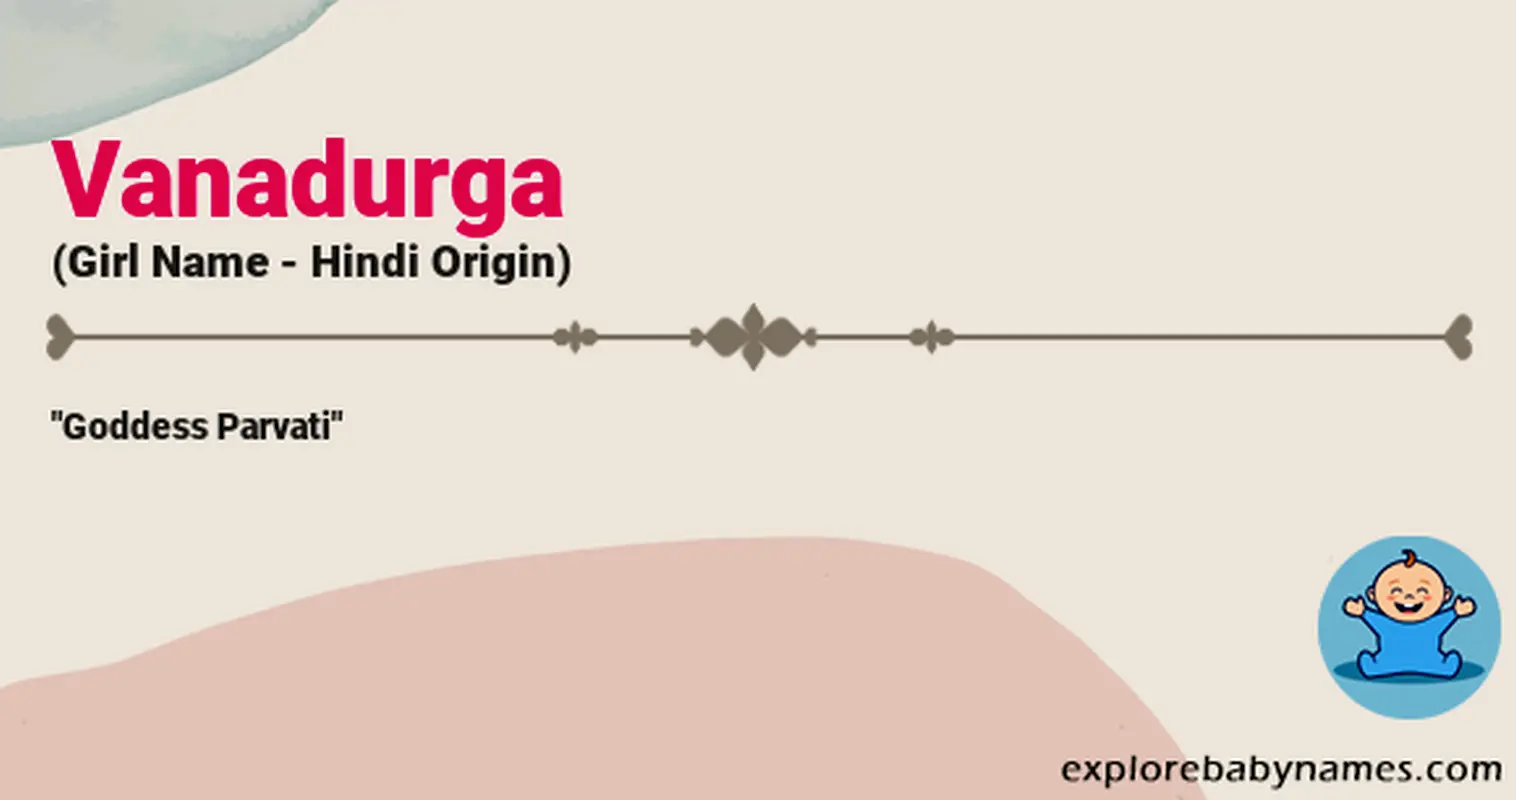 Meaning of Vanadurga